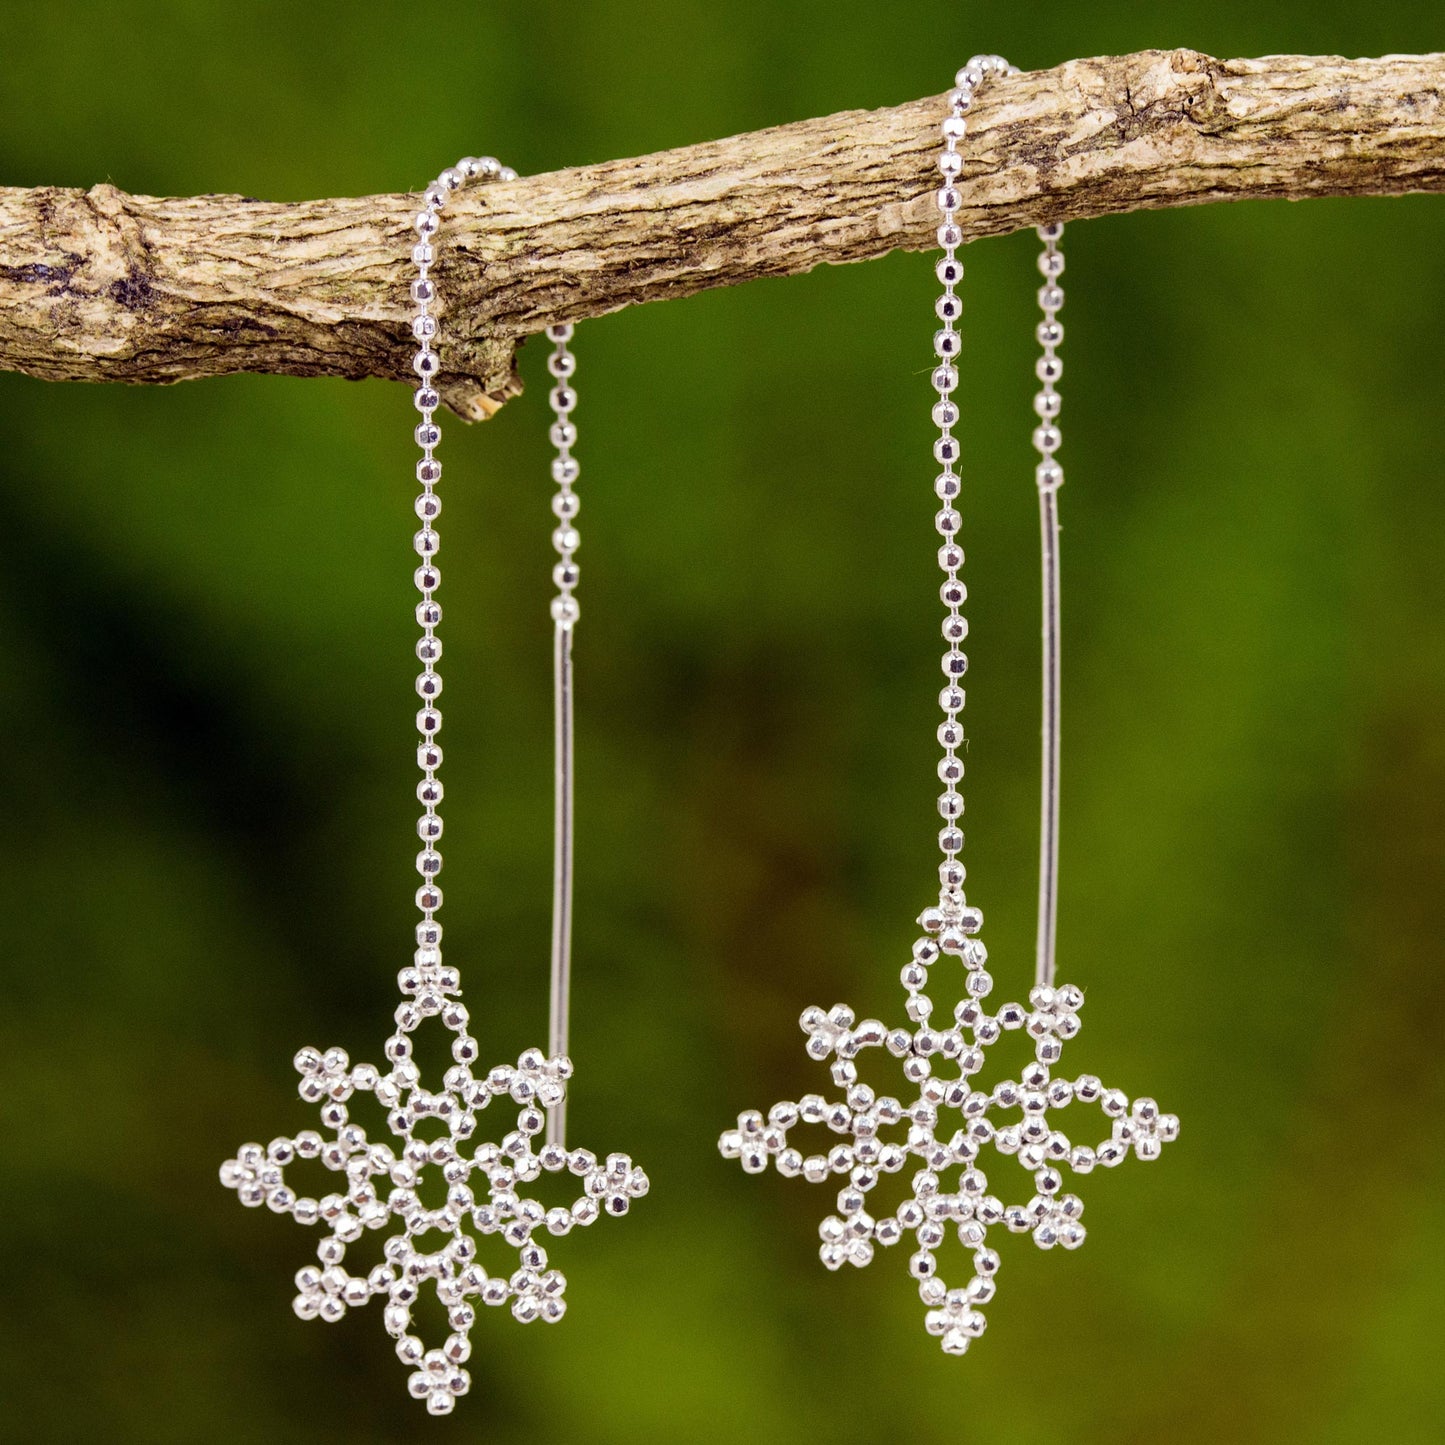 Silver Snowflakes Silver Dangle Earrings